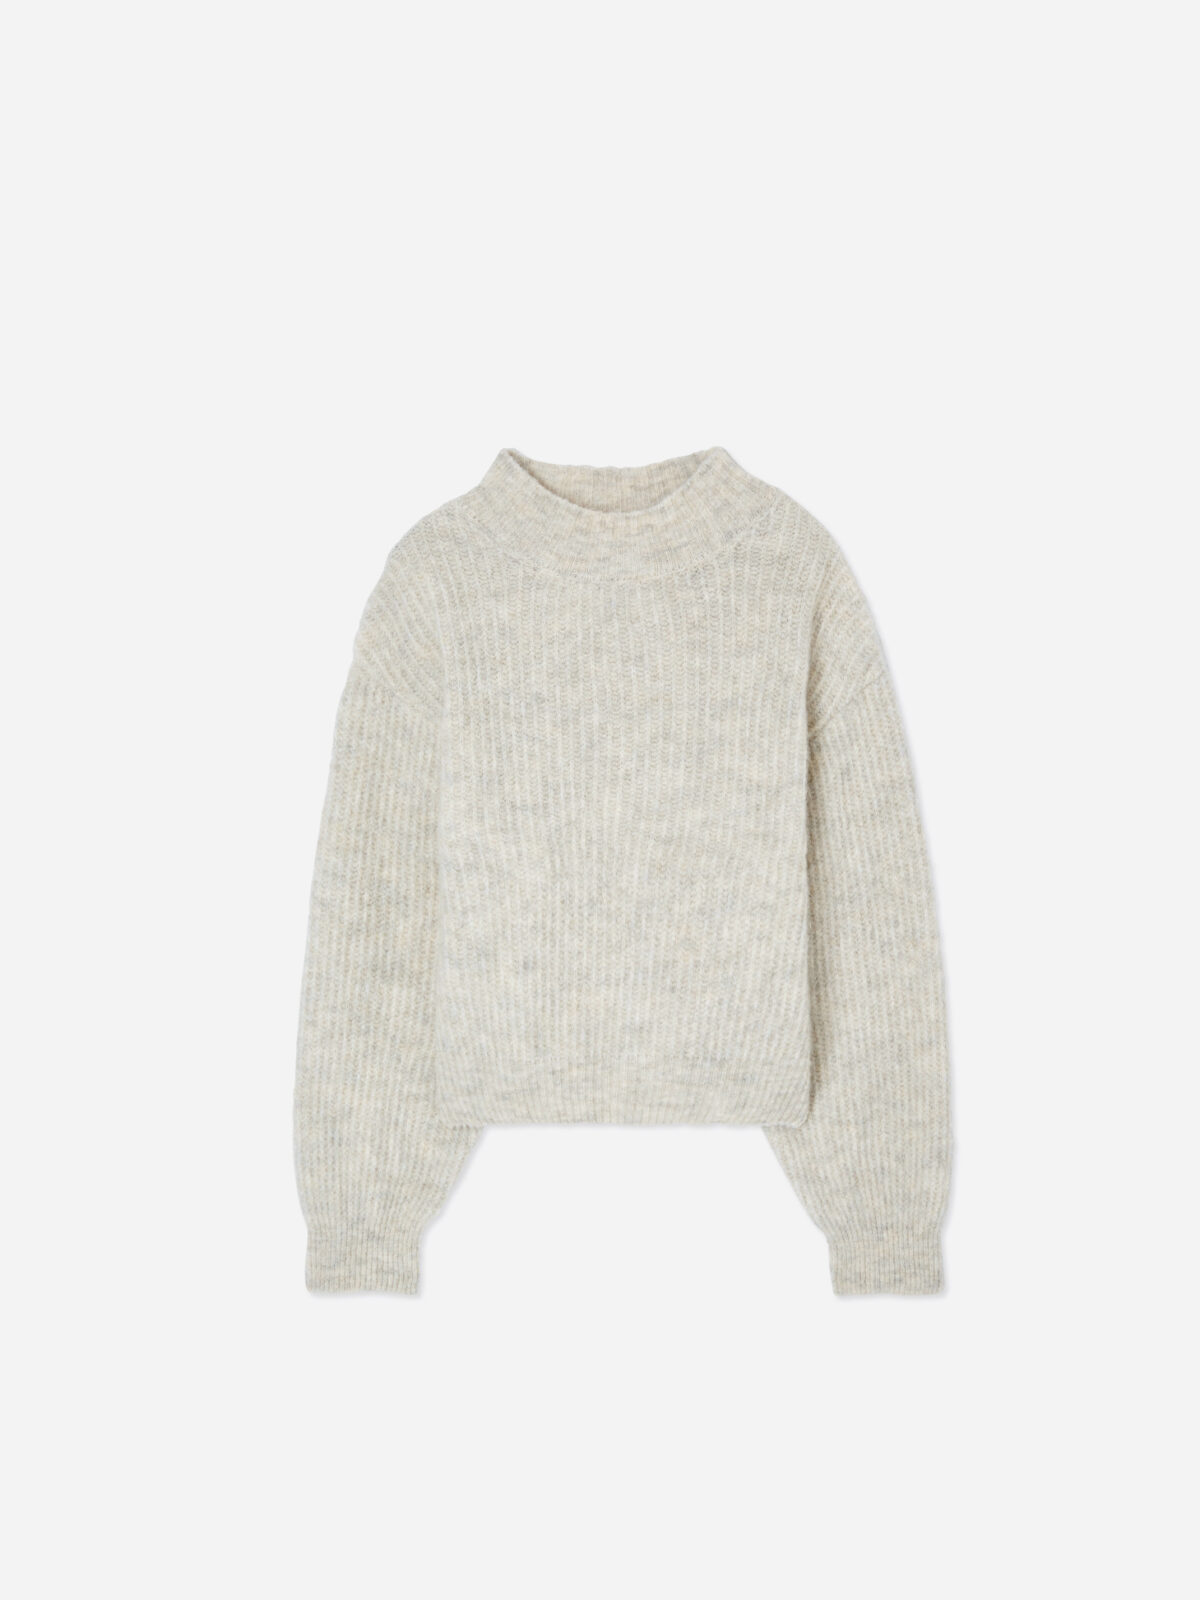 east-grey-wool-sweater-soft-american-vintage-matchboxathens